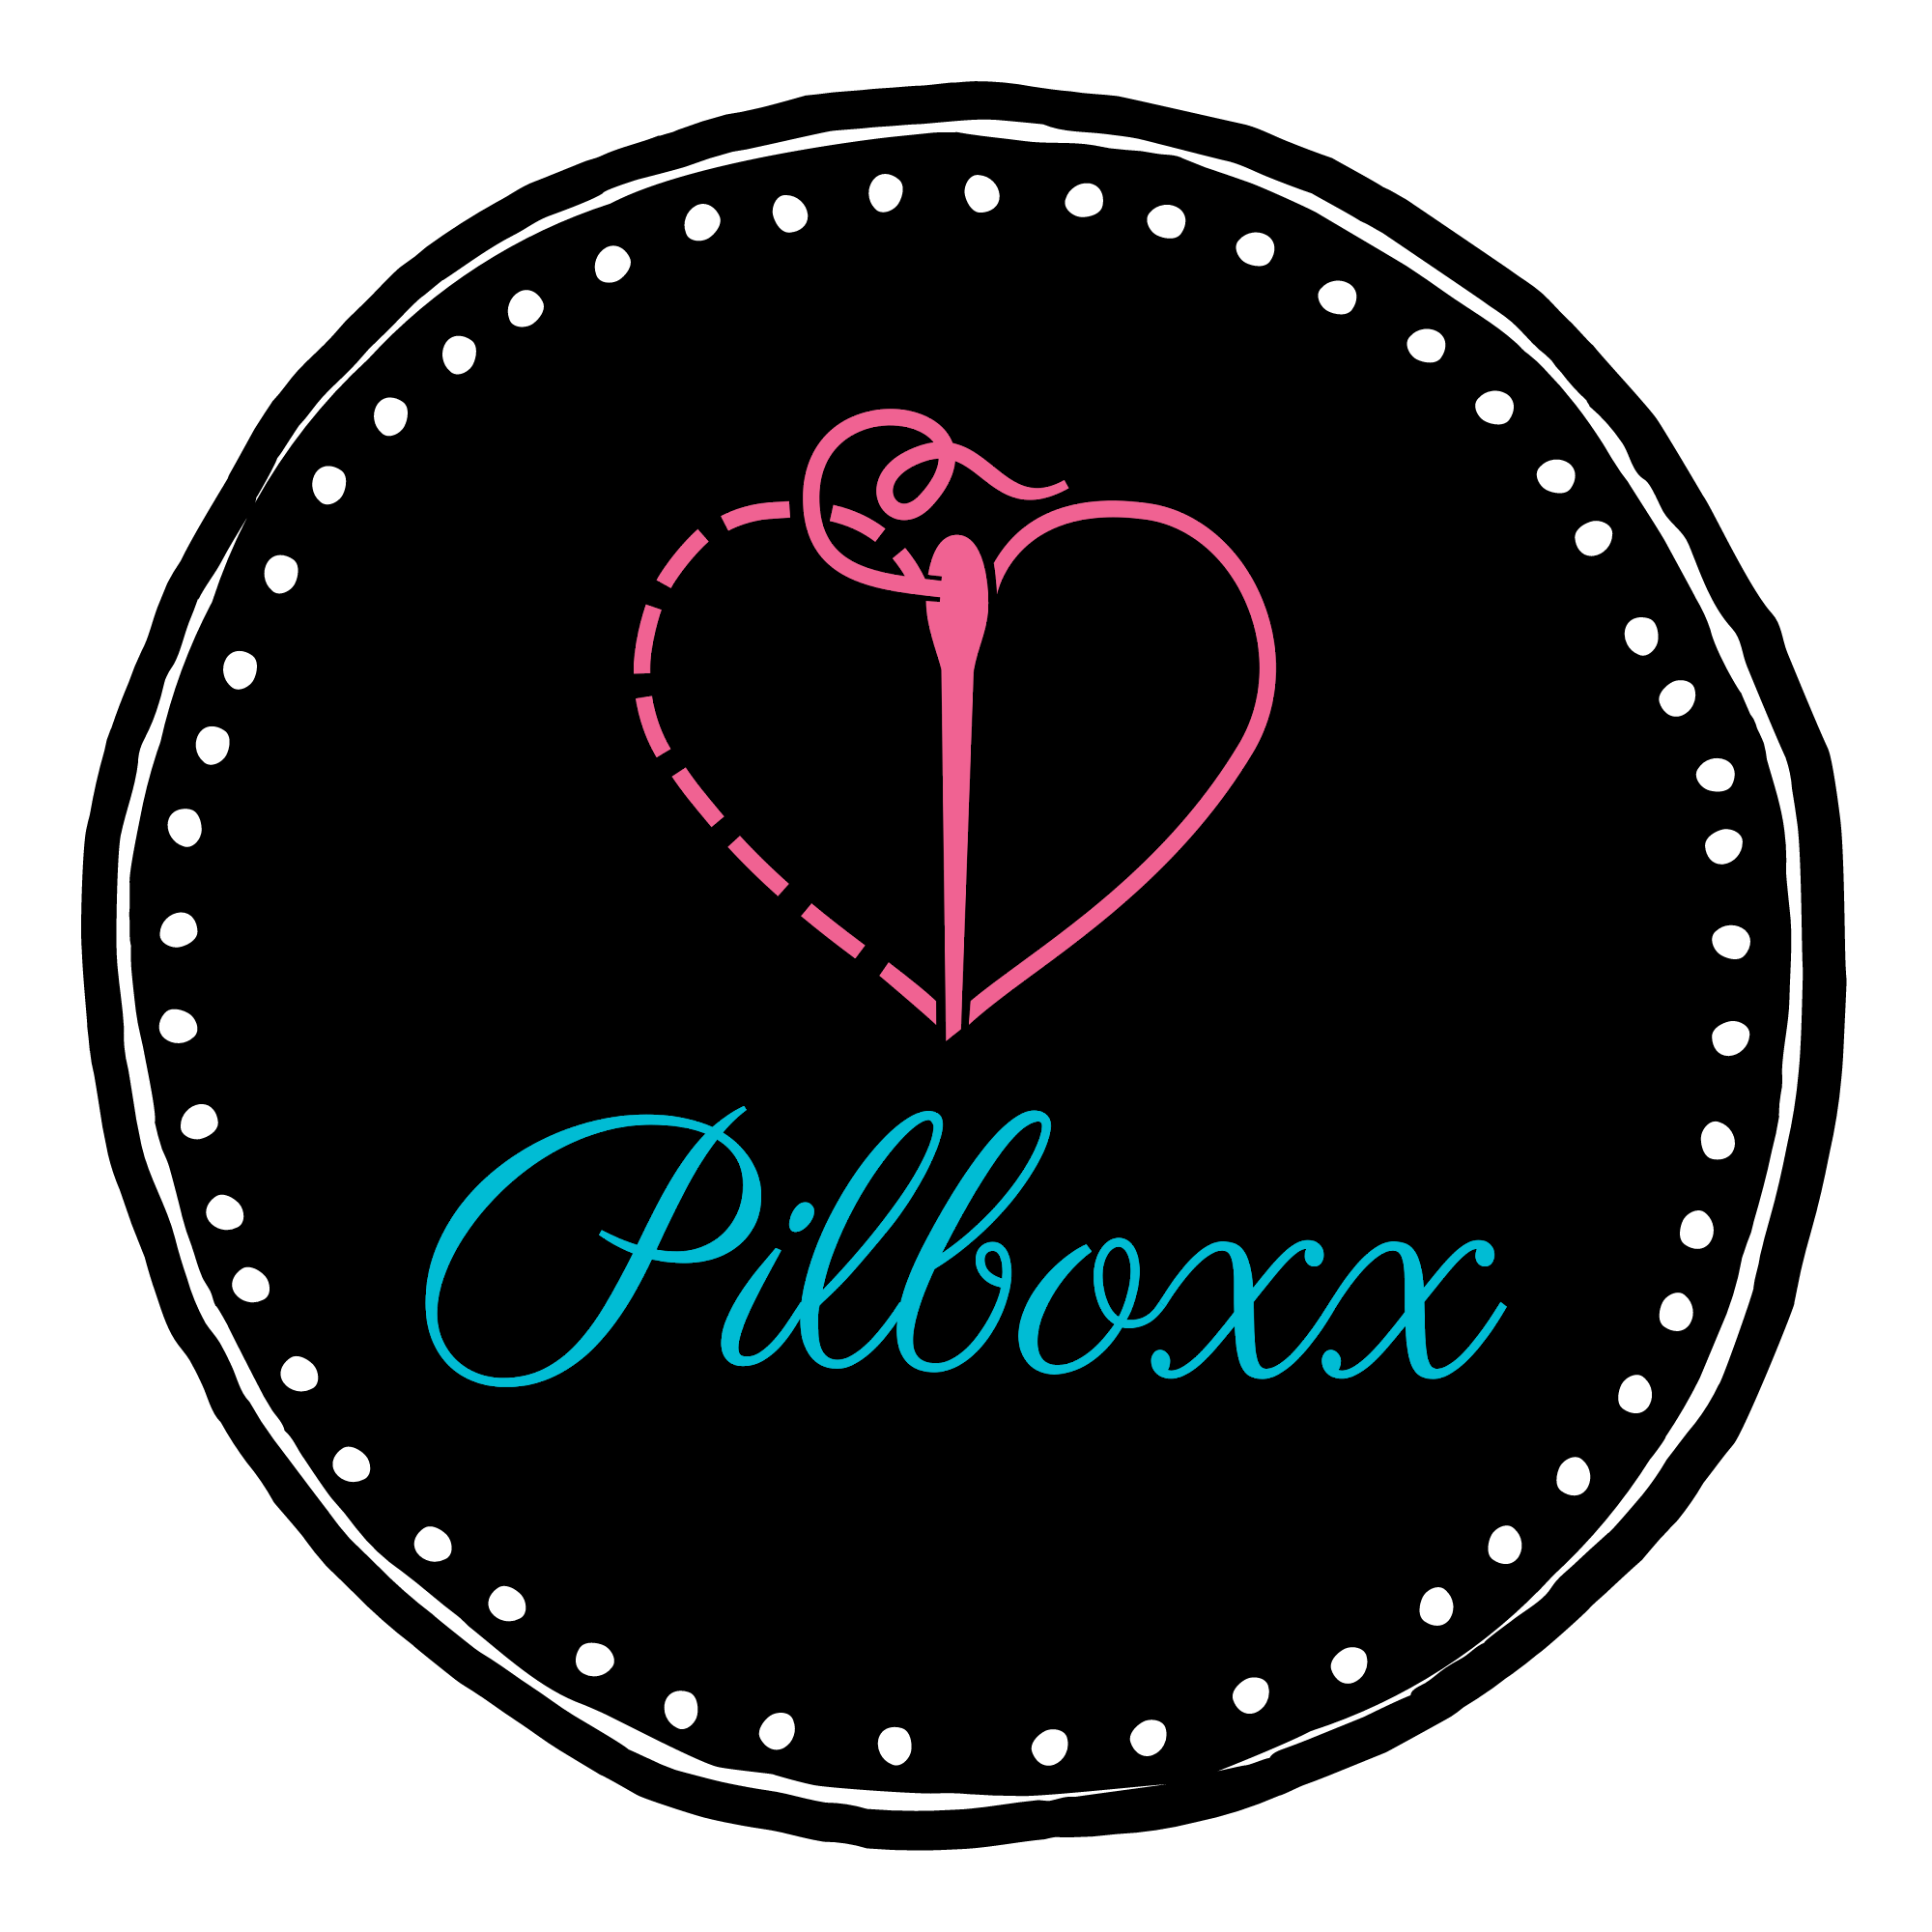 Pilboxx